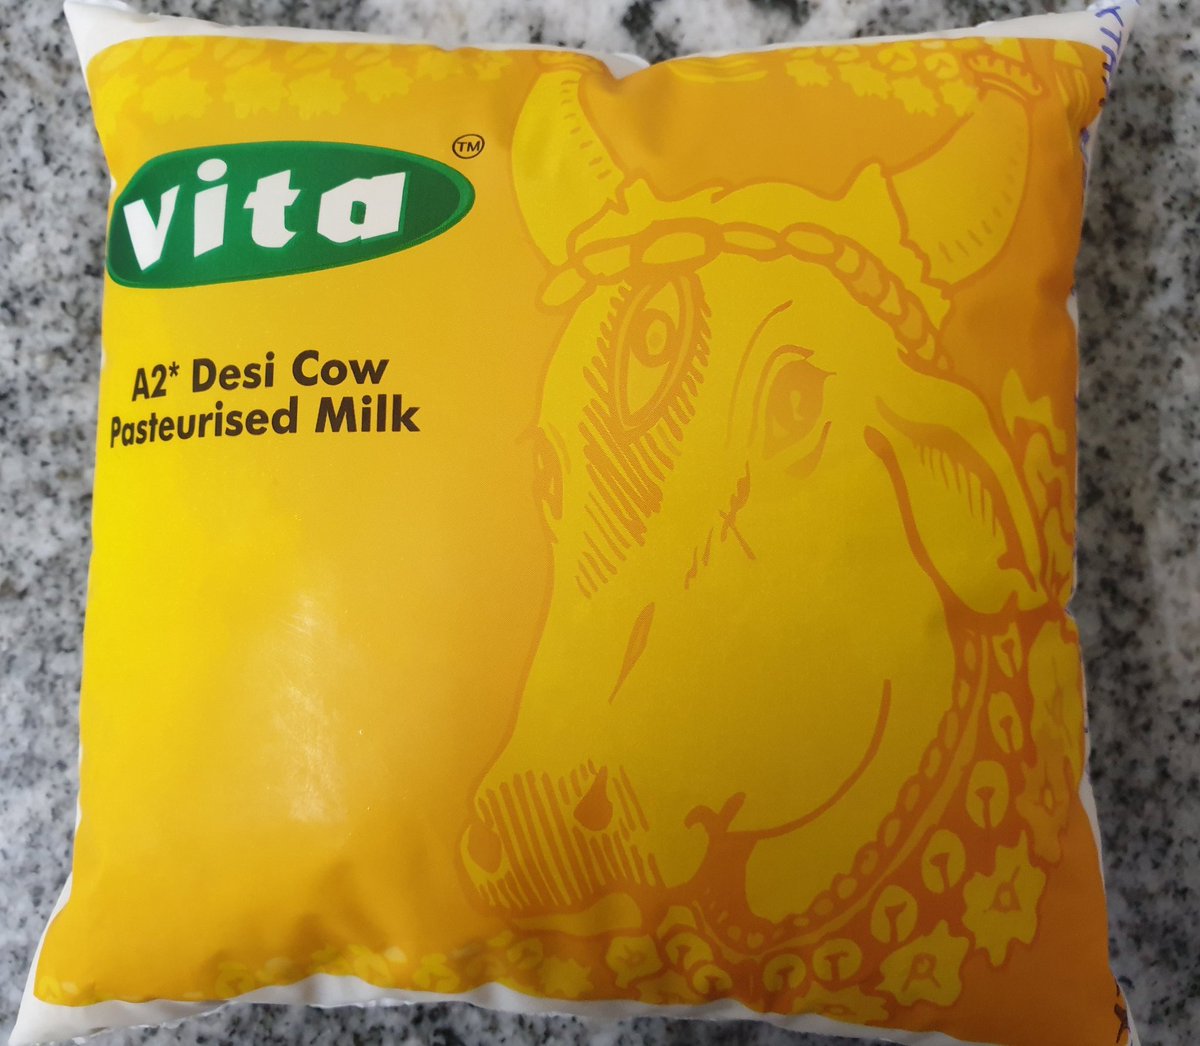 Homemade #Rosogolla. Soft, spongy, delicious. 
Thanks 2 excellent #A2DesiCowMilk fm @HDDCFVITA. This #Milk is a hidden gem in #Haryana #VitaDairy product portfolio.
#রসগোল্লা #रसगुल्ला #BengaliSweets #BengaliDelicacies #IndianDessert #dessert #Gurugram #Gurgaon #HDDCF #VitaIndia